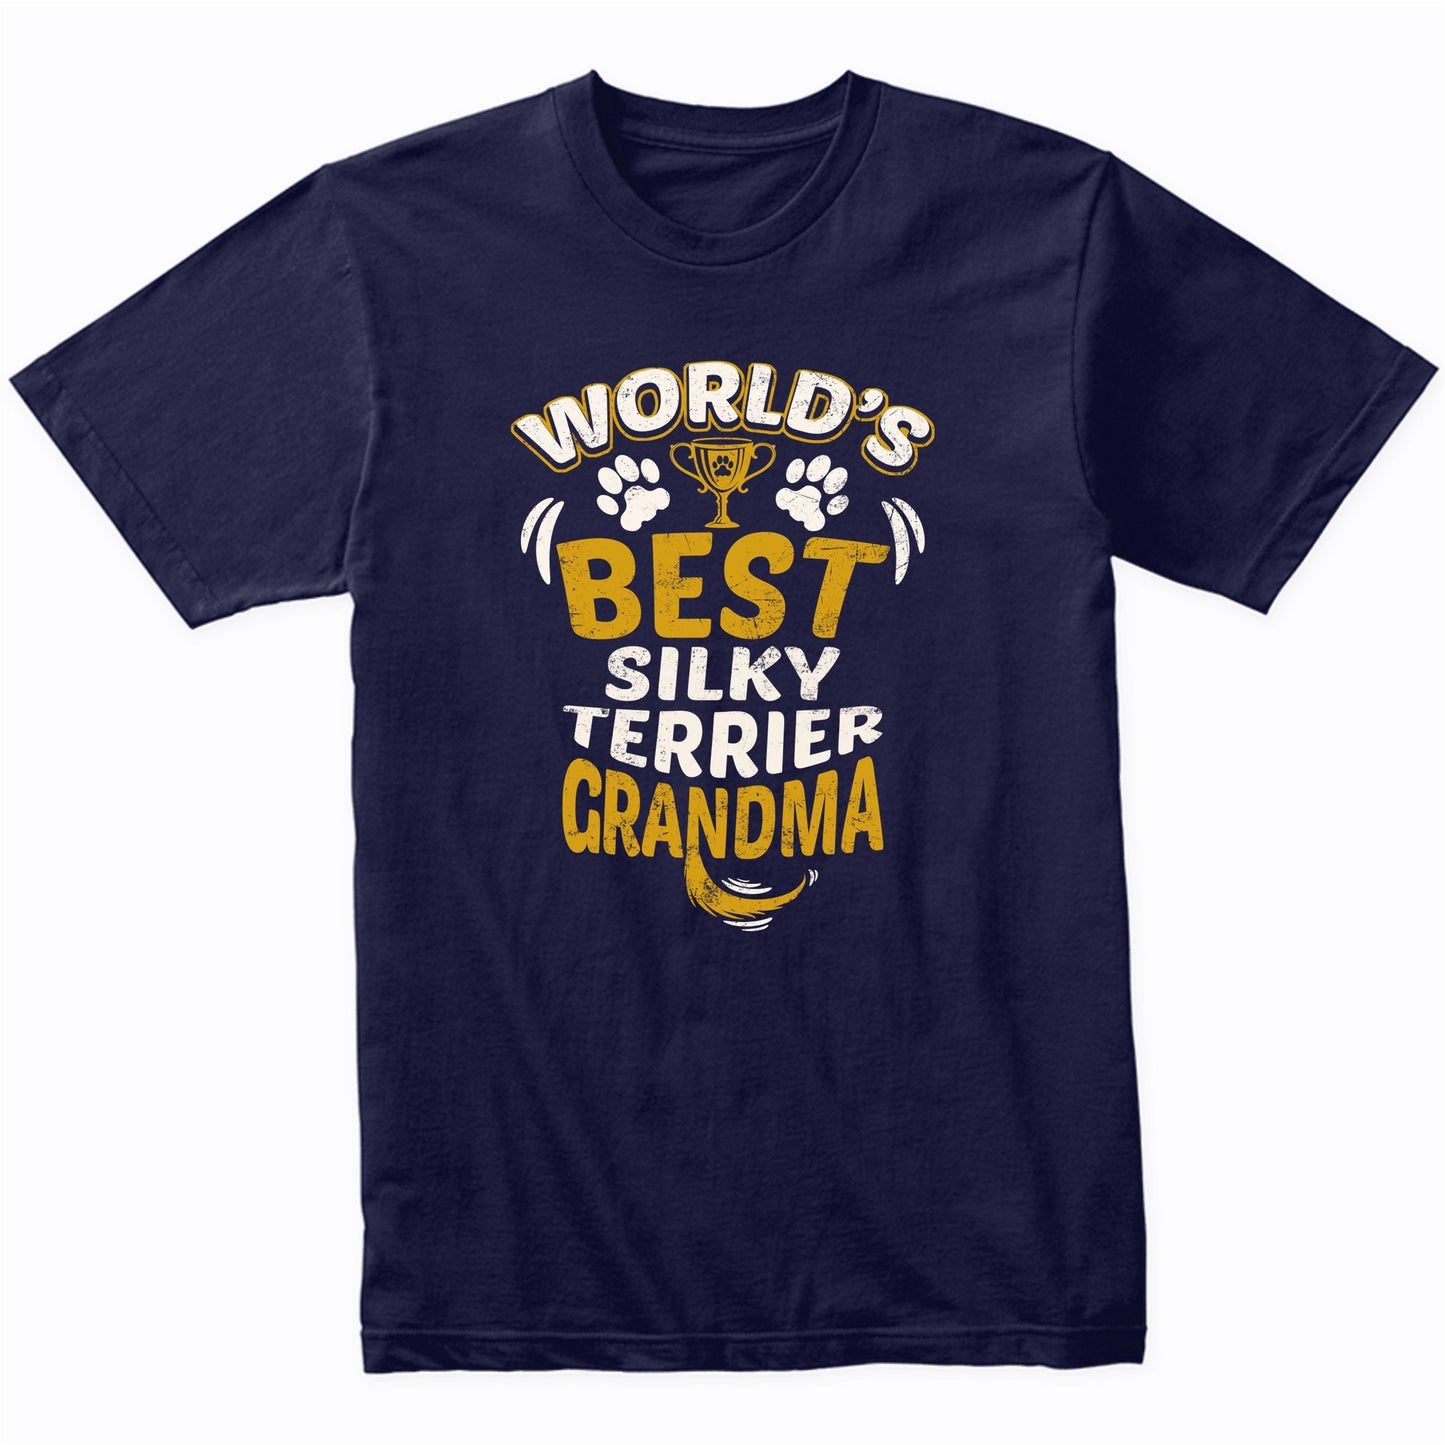 World's Best Silky Terrier Grandma Graphic T-Shirt